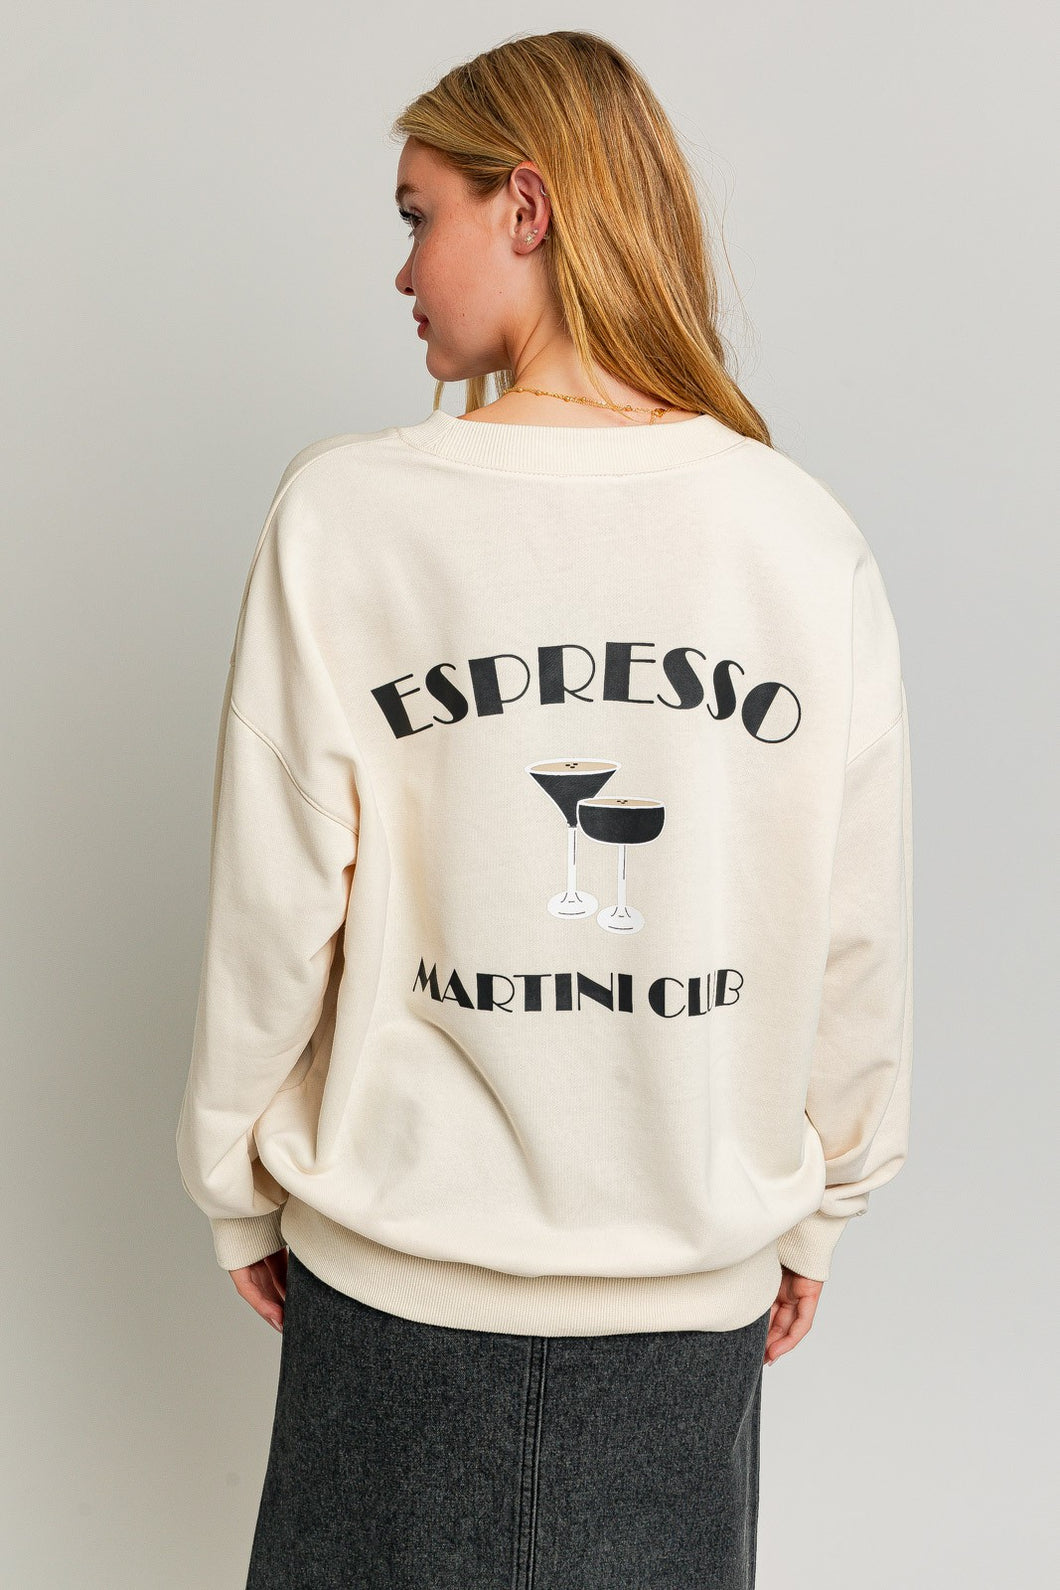 Espresso Martini Club Crew Neck Sweatshirt